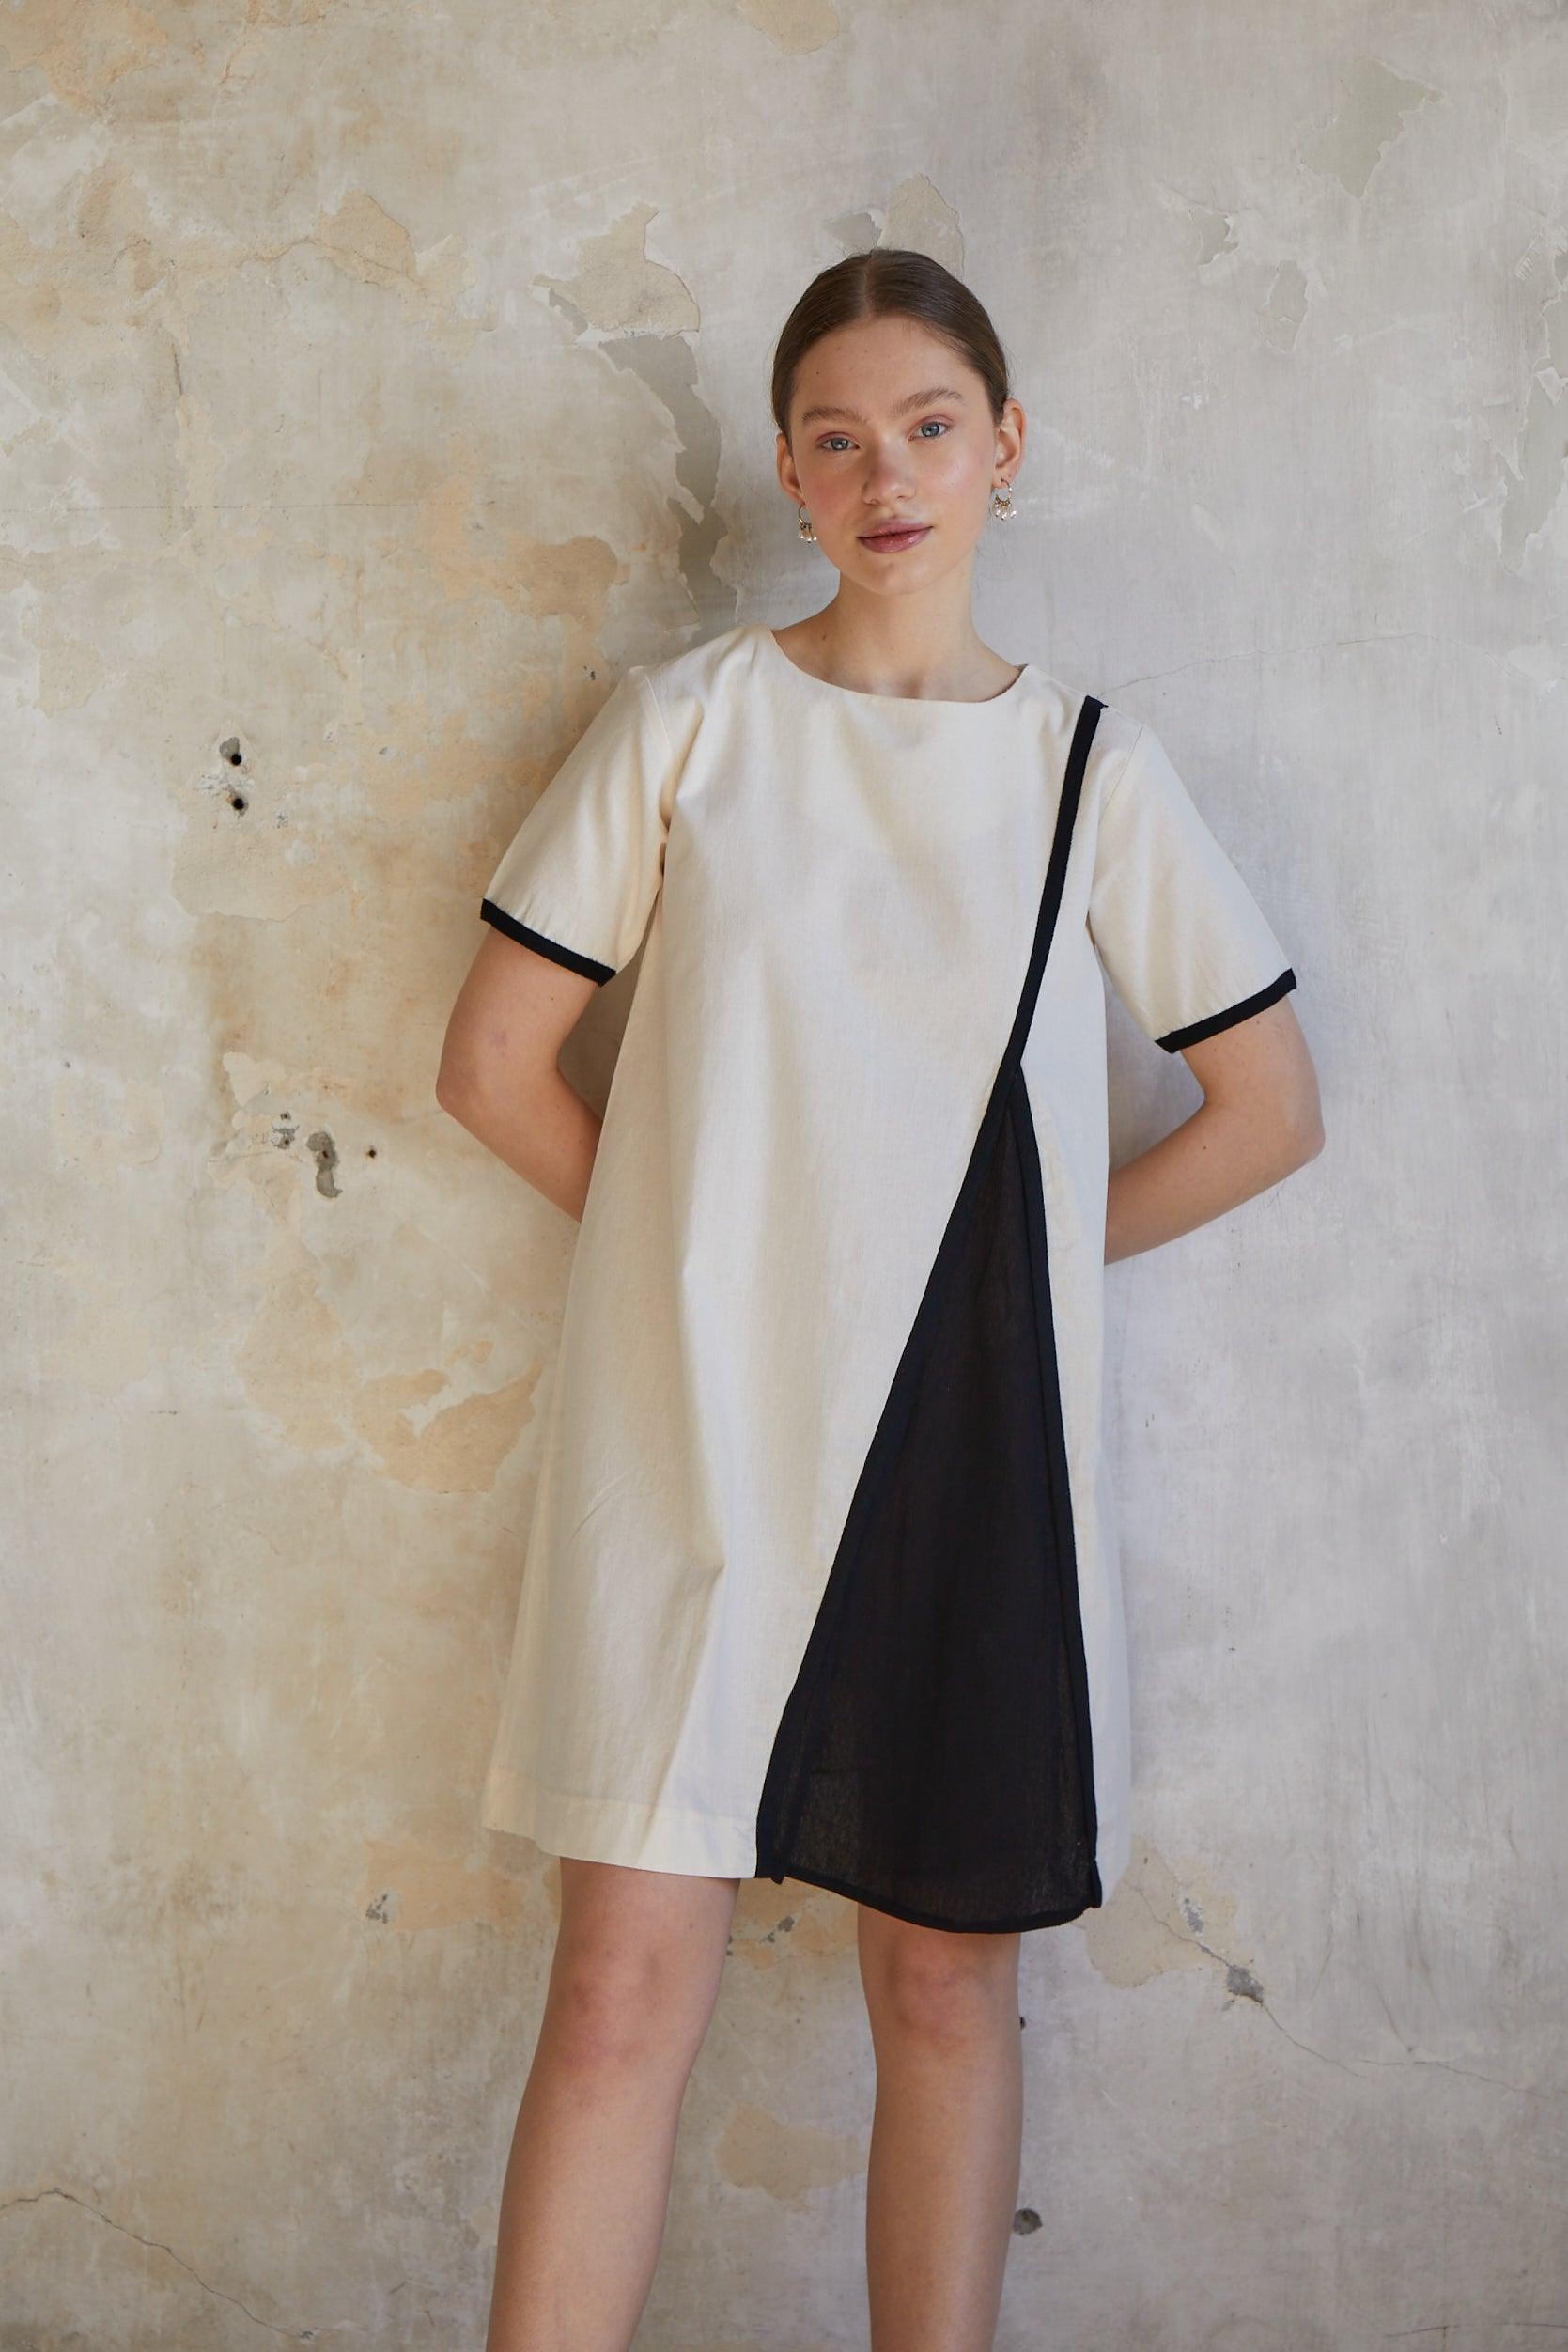 Mini Raw Dress with Pleat Detail - 100% Organic Cotton - trendynow